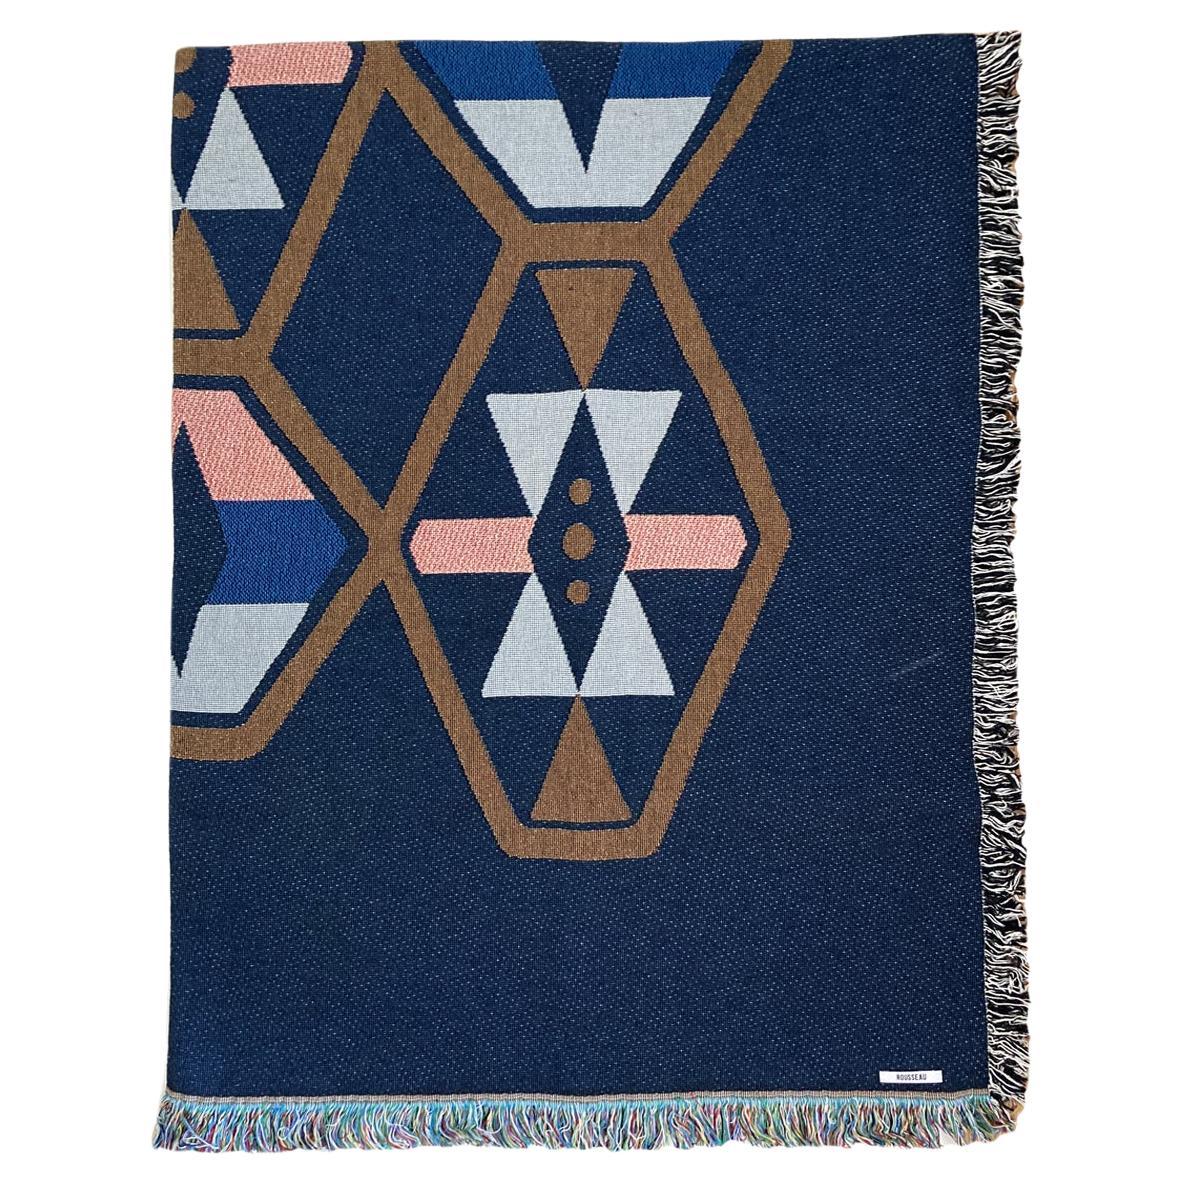 Petite Loom Woven Throw Blanket, Twilight Navy Geo, 40 x 54